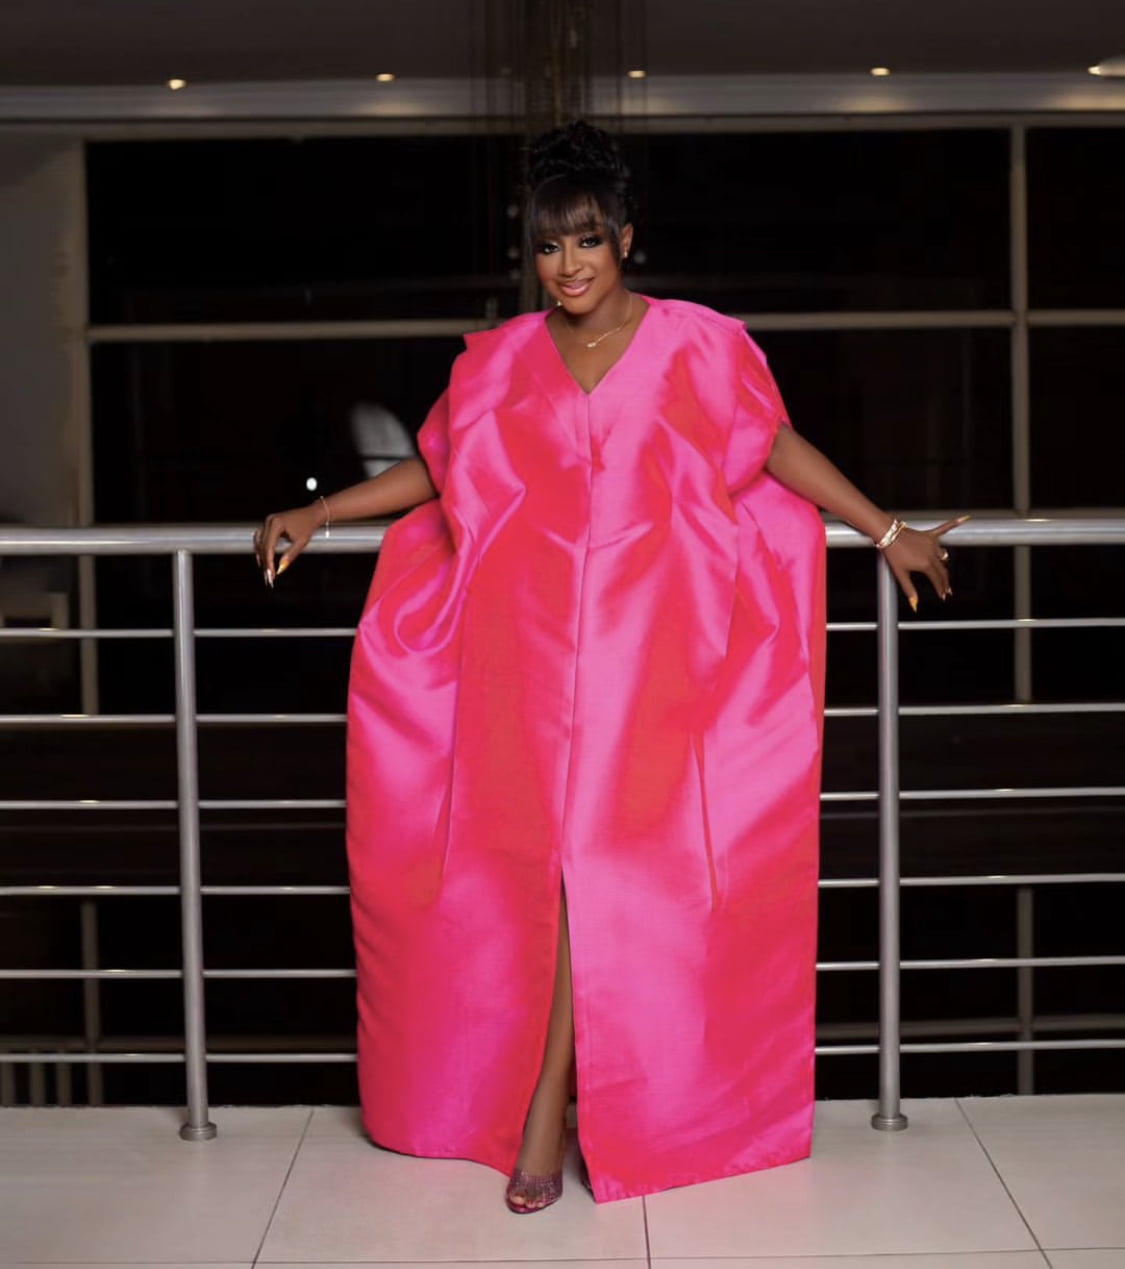 Ini Edo in a pink ‘bubu’ maxi dress.